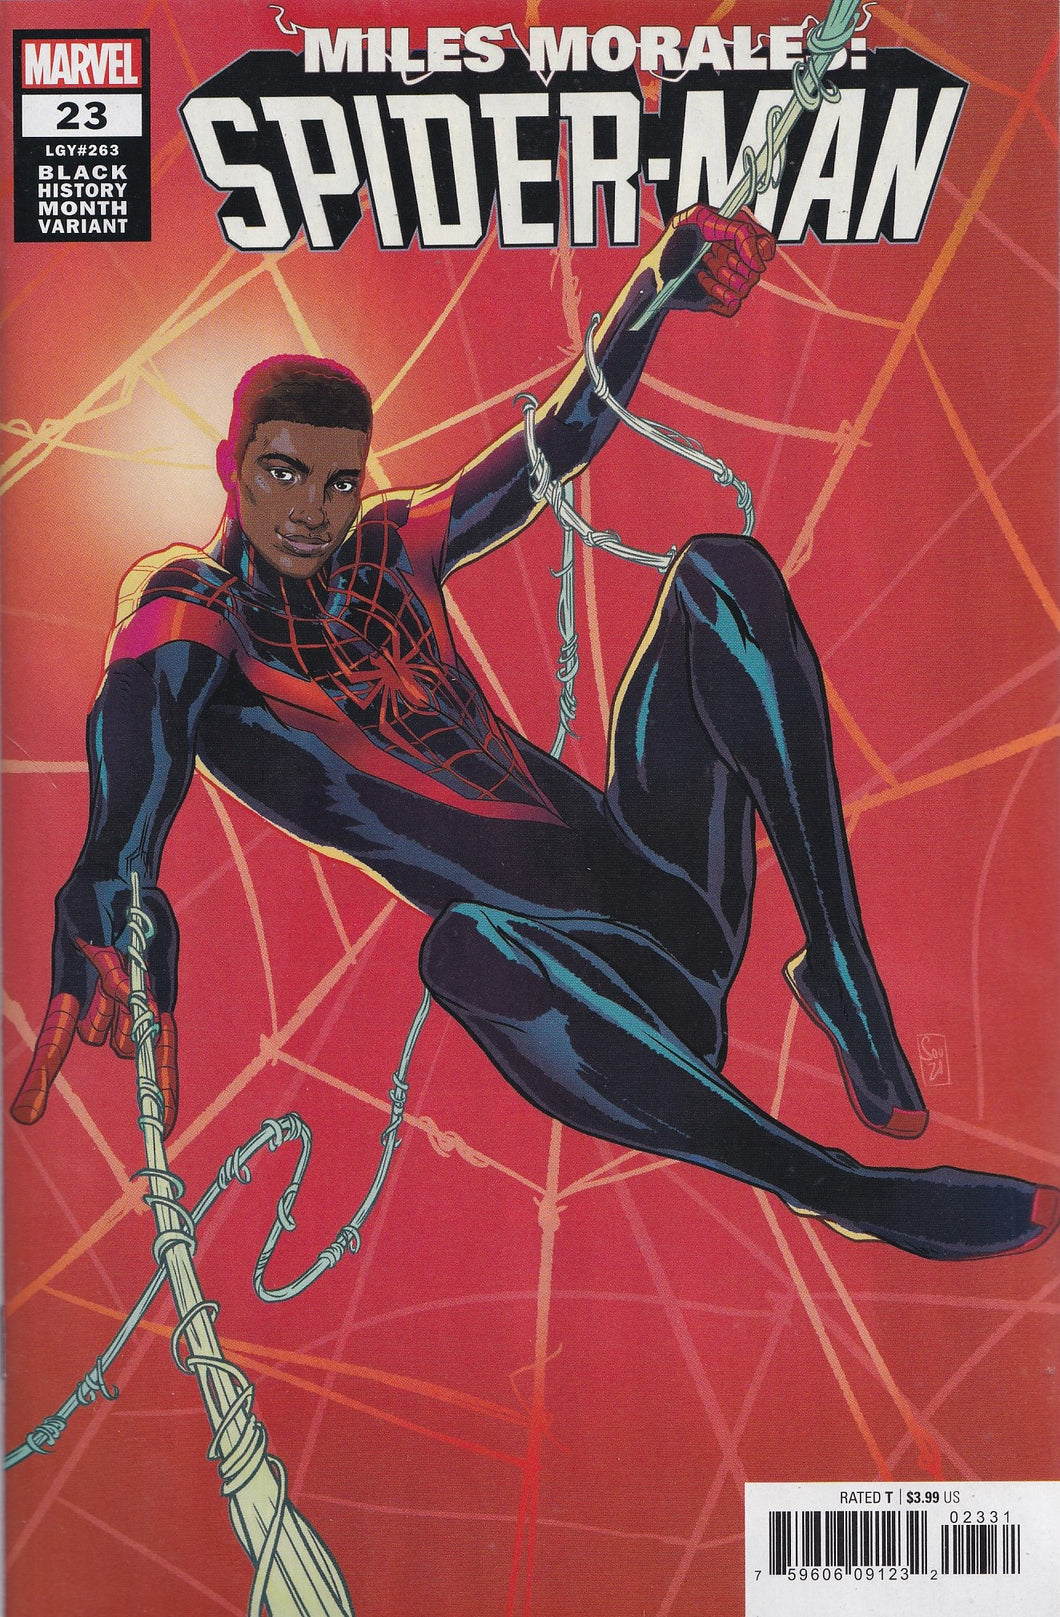 MILES MORALES: SPIDER-MAN #23 (SOUZA BLACK HISTORY MONTH VARIANT) Comic ~ Marvel